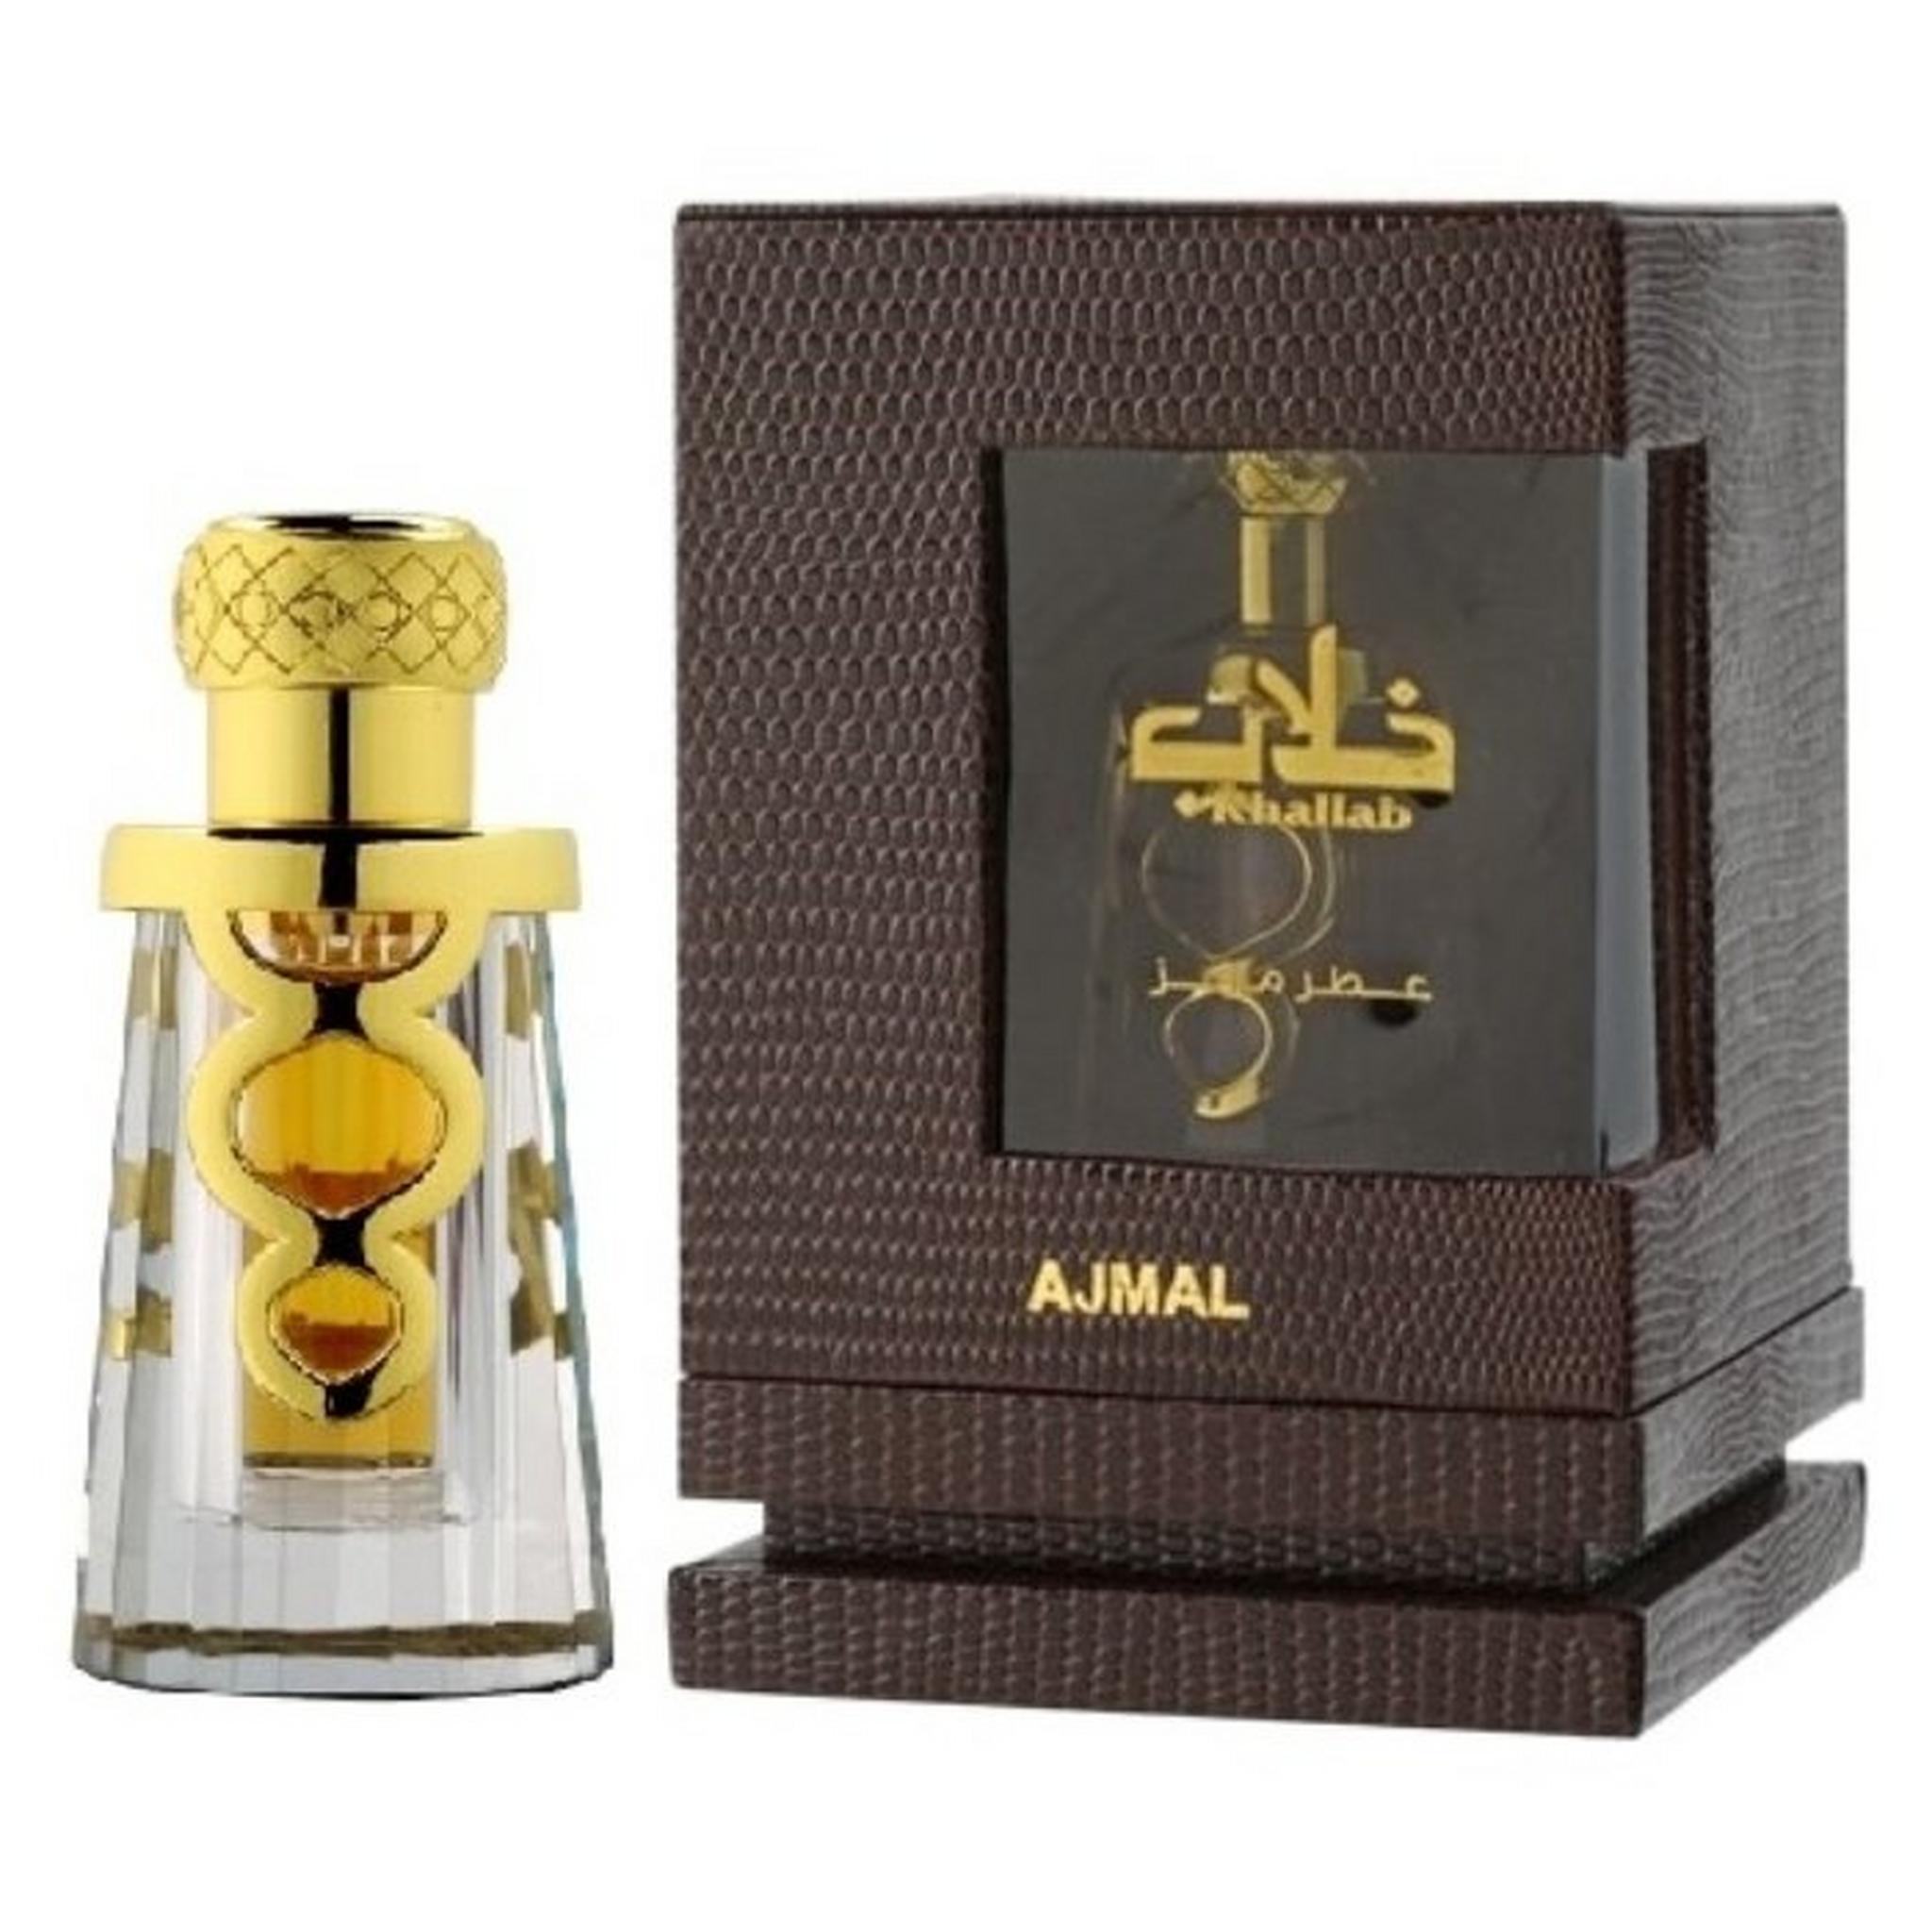 Ajmal Khallab Concentratd Perfum Oil 3Ml